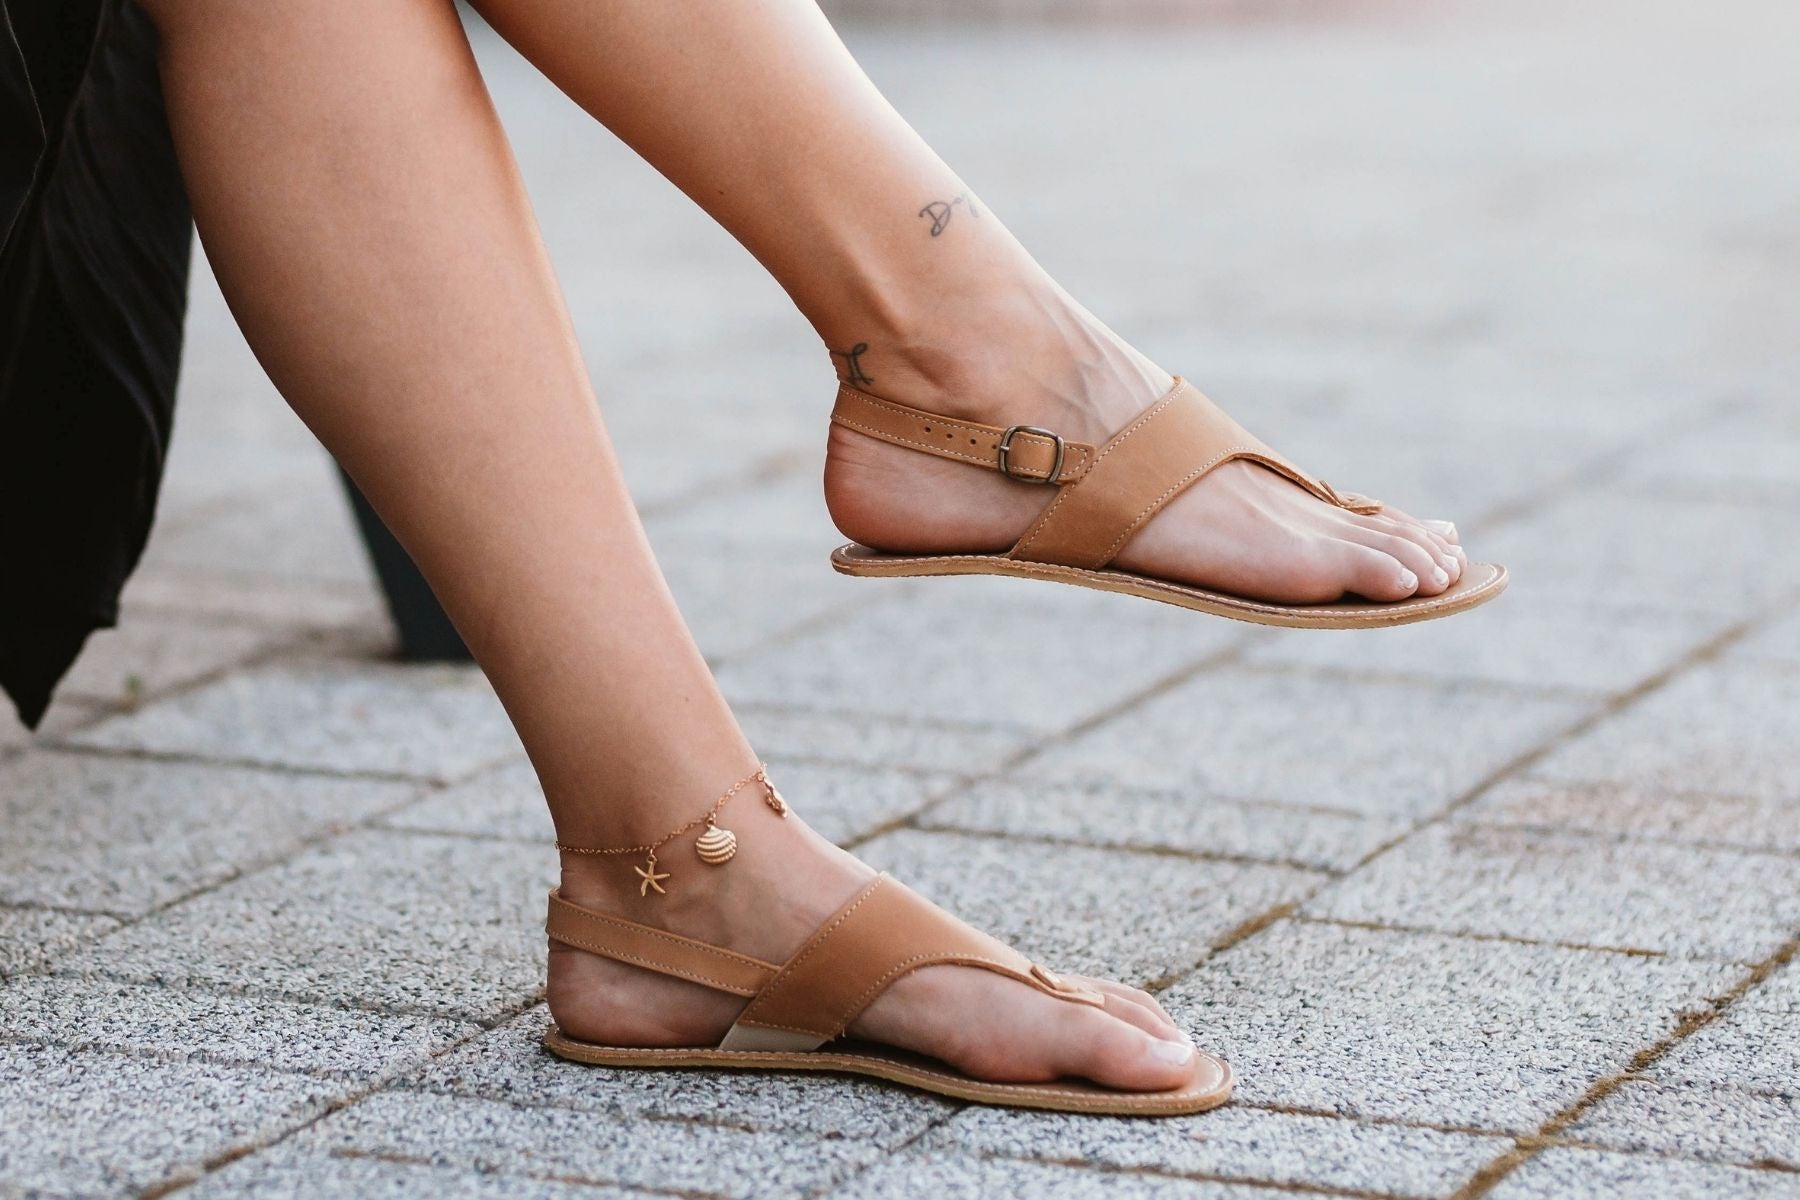 Barefoot Sandals - Be Lenka Promenade - Sand 5 OzBarefoot Australia